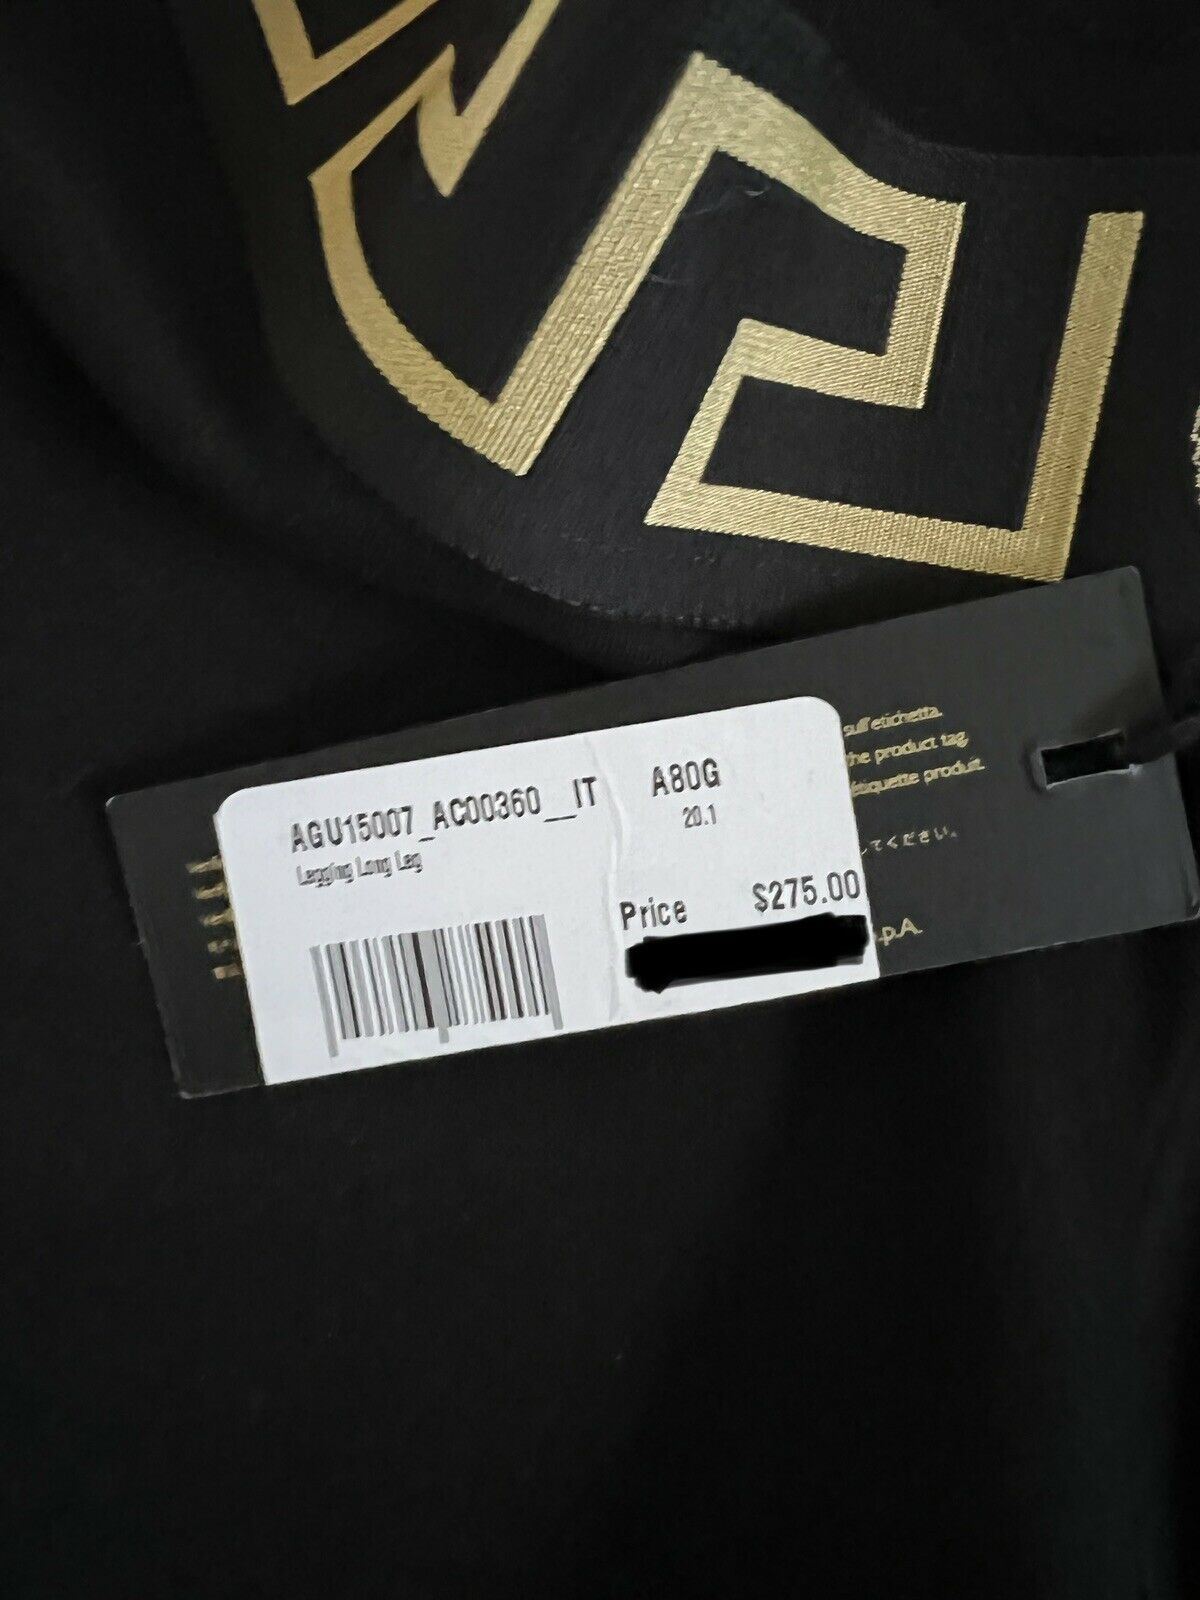 NWT $275 Versace Men's Black Medusa Greca border Track Pants 7 Made in Italy